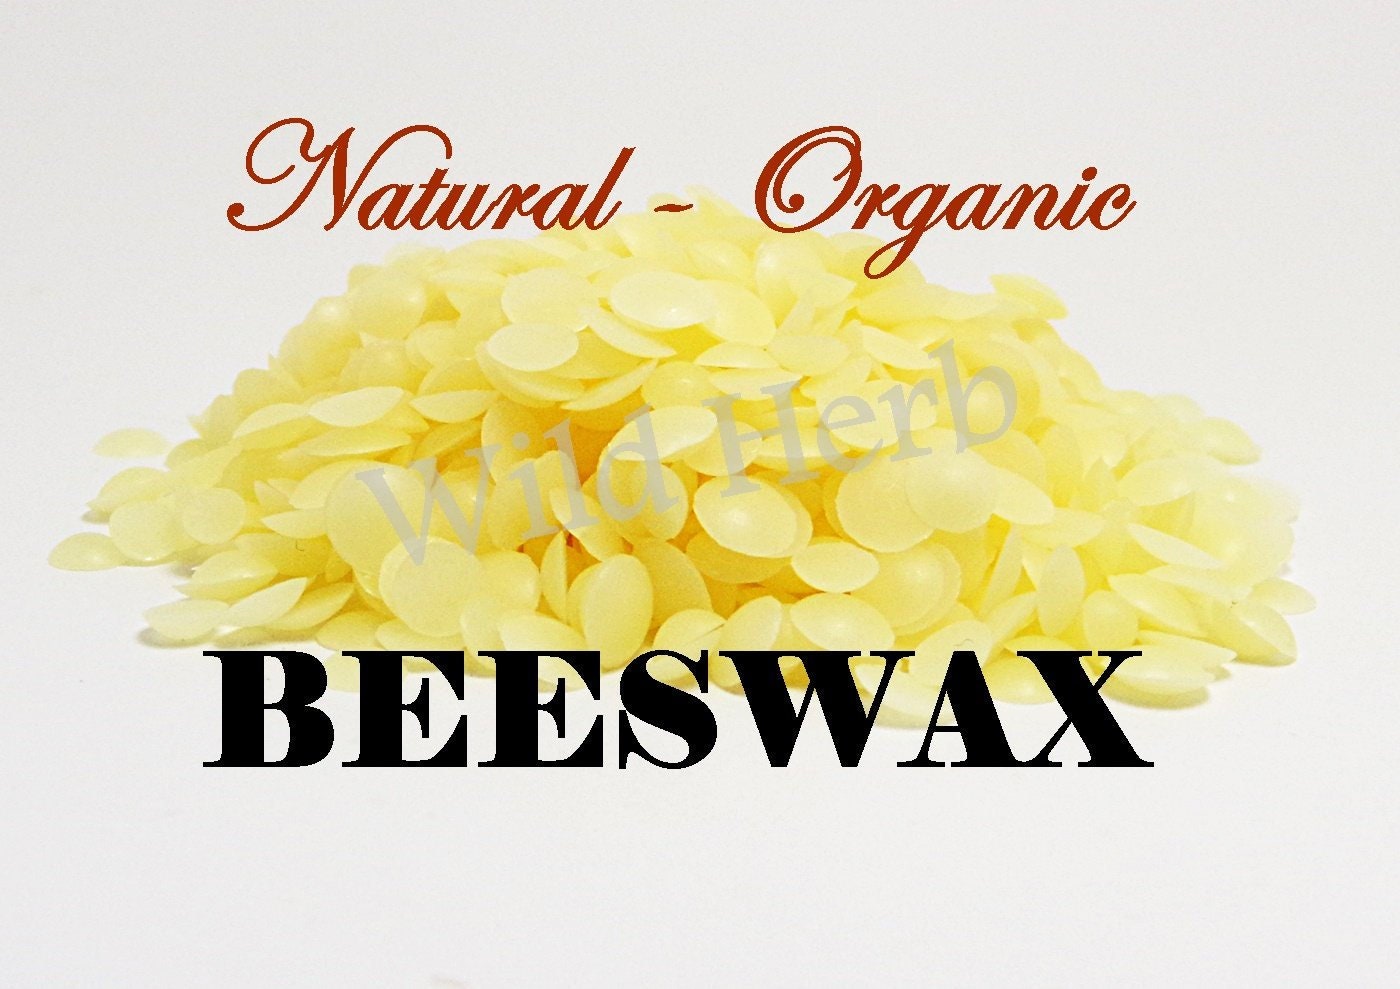 YELLOW BEESWAX BEES WAX ORGANIC PASTILLES BEARDS PREMIUM 100% PURE